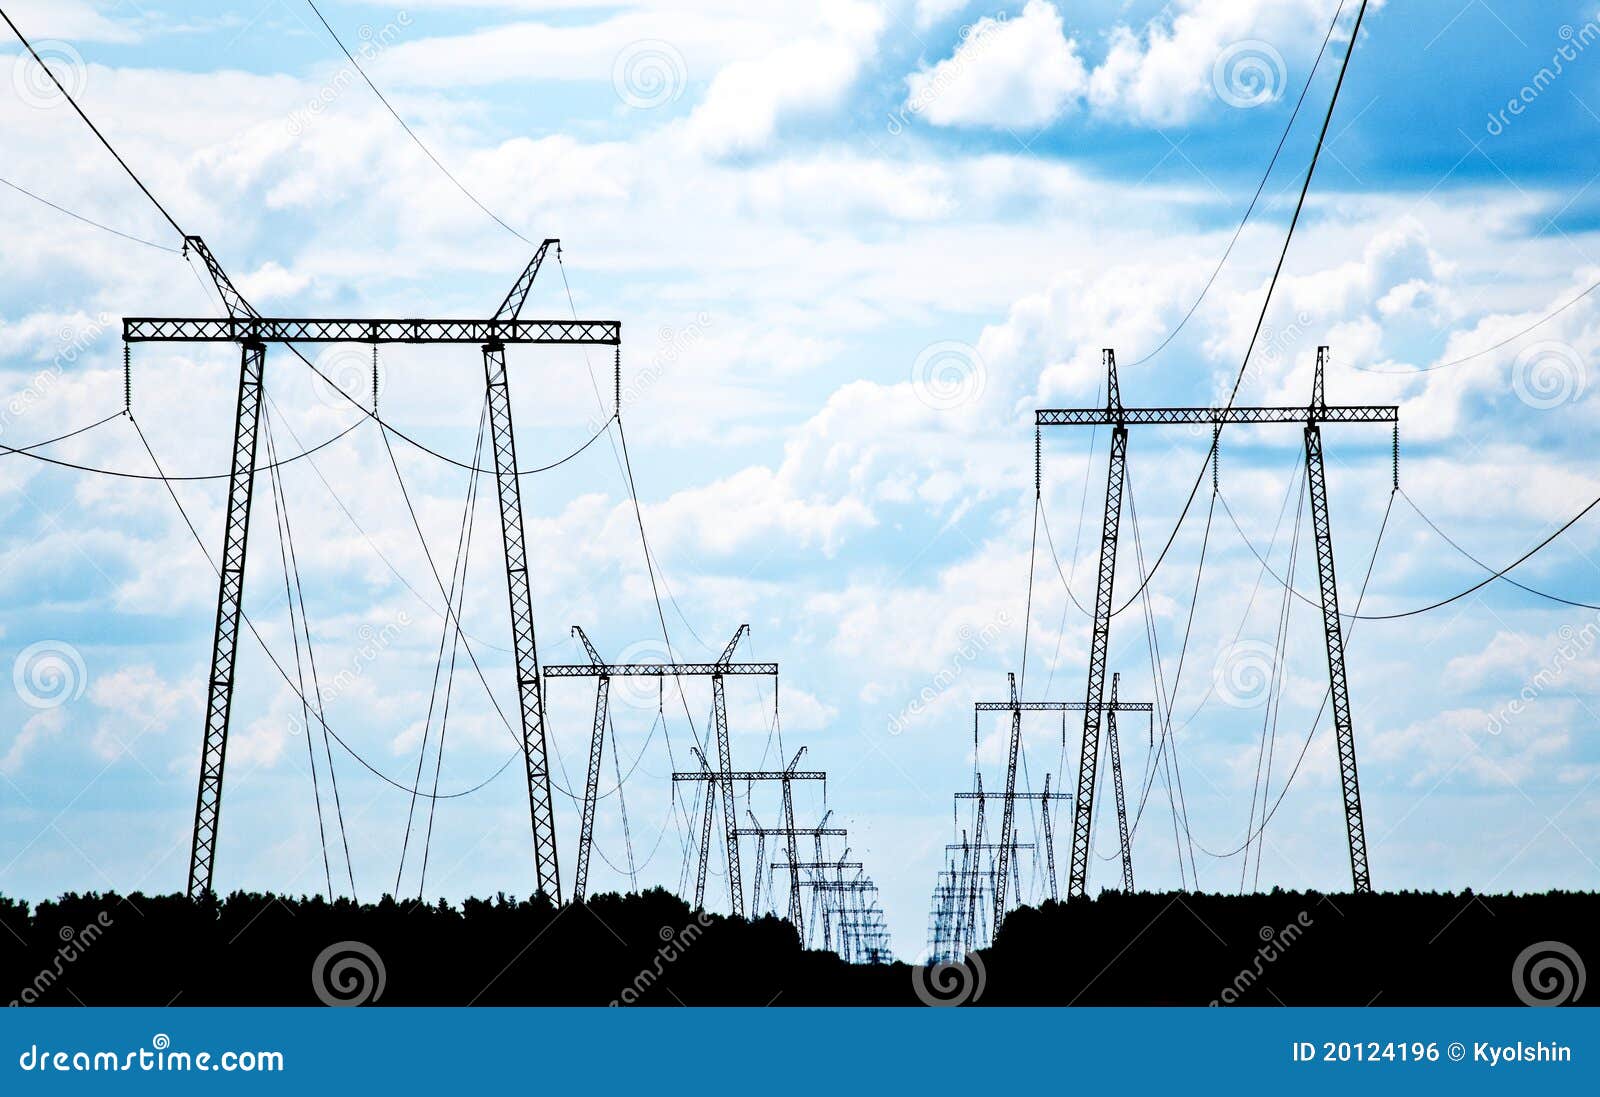 power grid clipart - photo #50